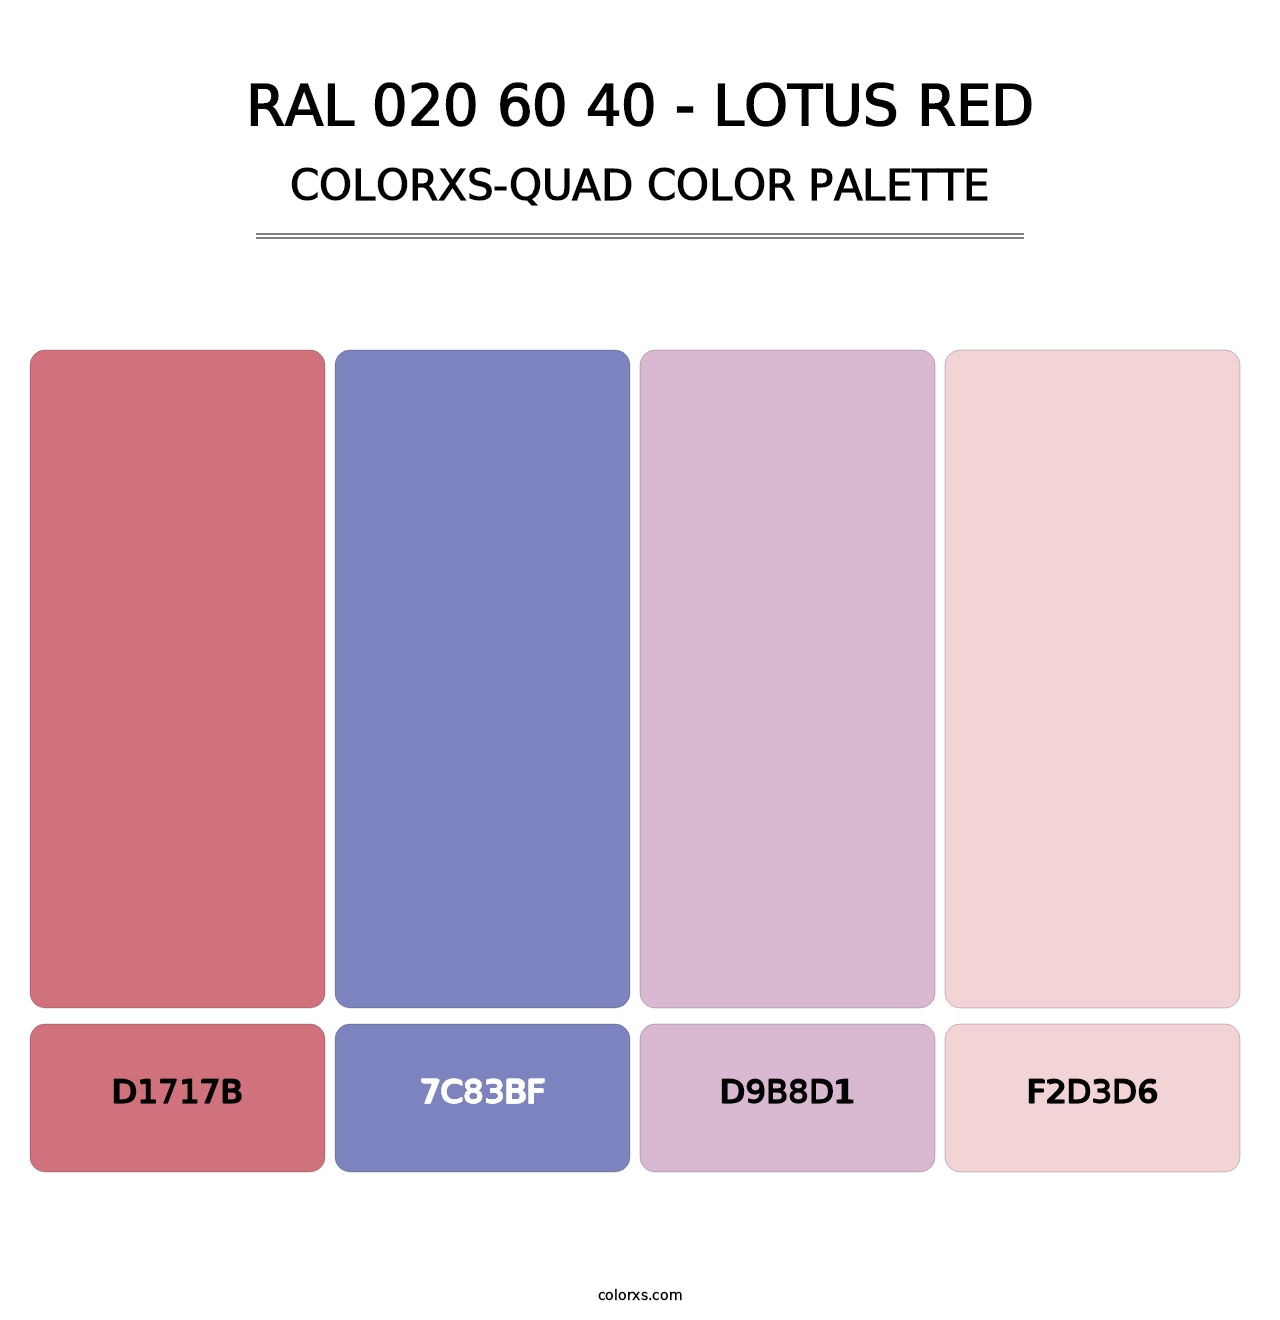 RAL 020 60 40 - Lotus Red - Colorxs Quad Palette